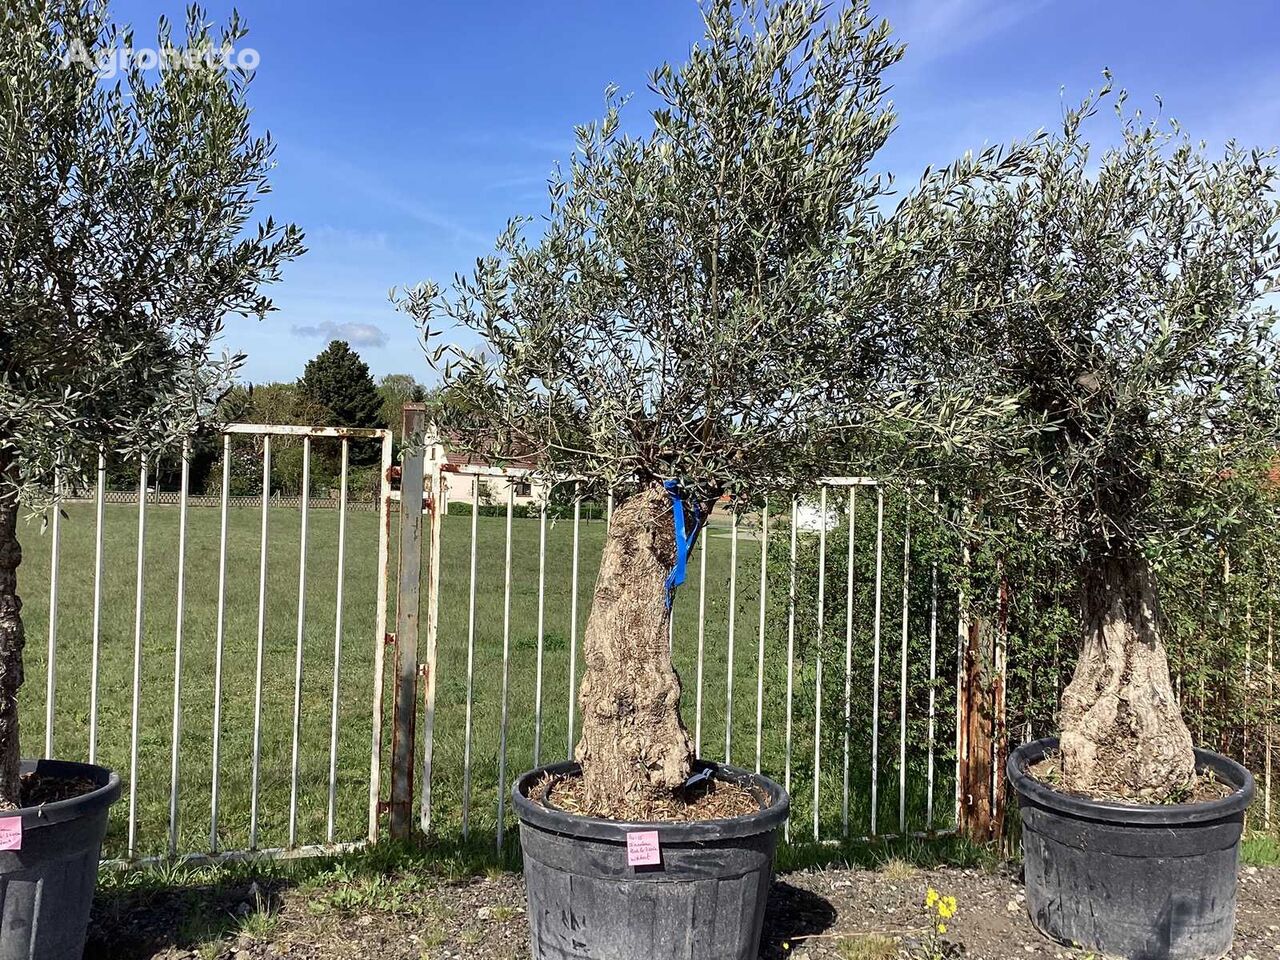 Olivenbaum (Winterhart) fruit tree sapling